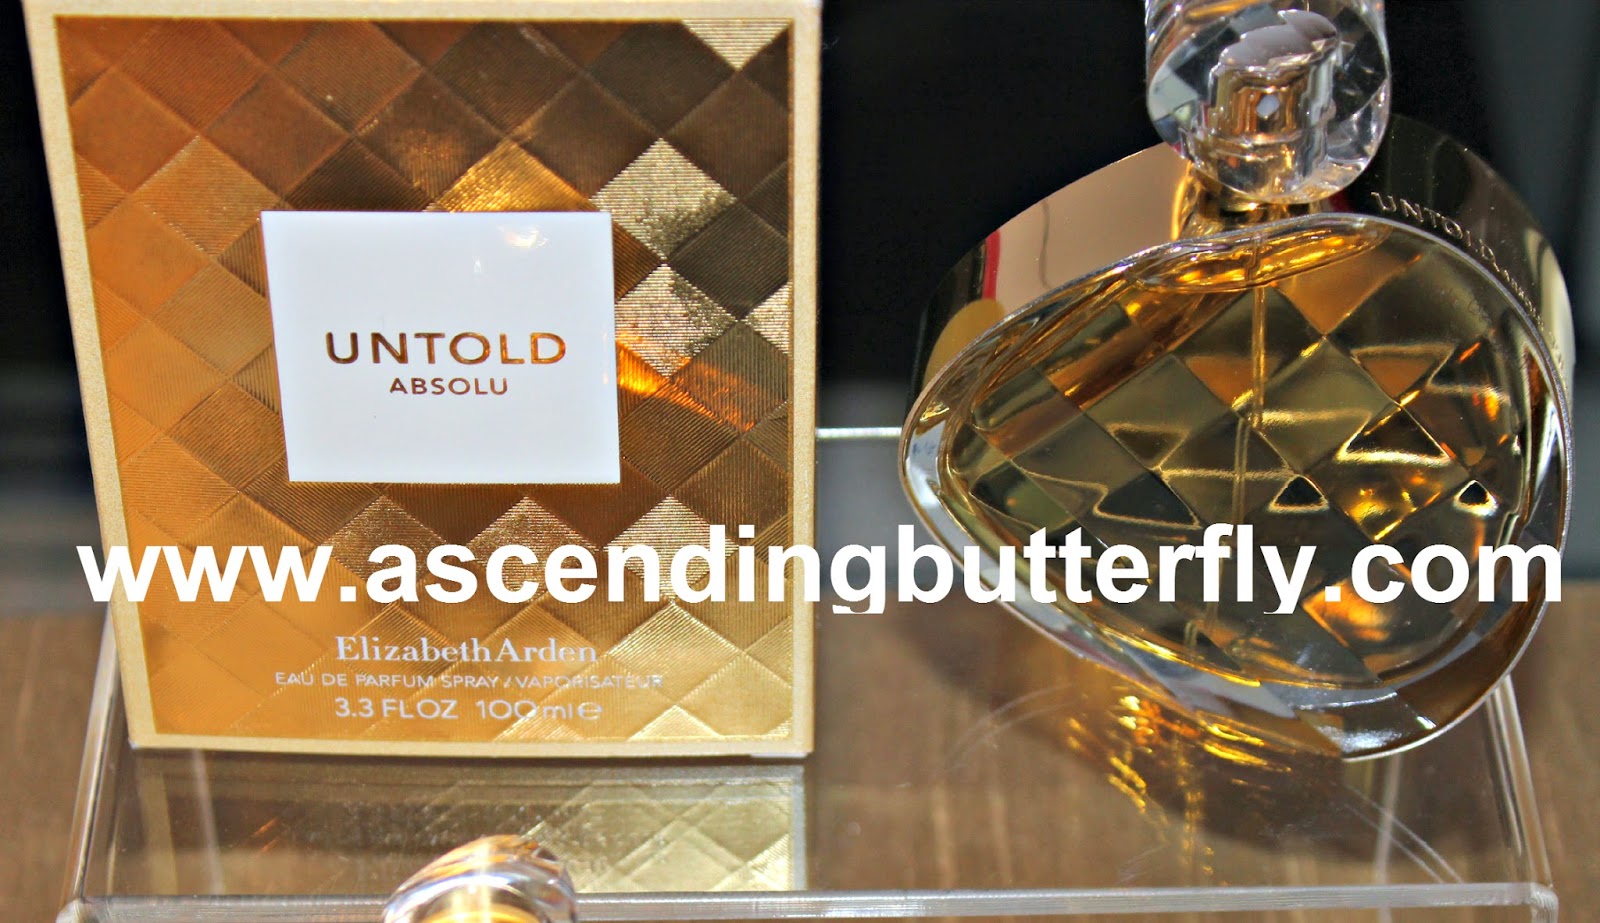 Celebrate the Season Elizabeth Arden Untold Absolu Perfume #CelebrateInStyle, Fragrances, Scents